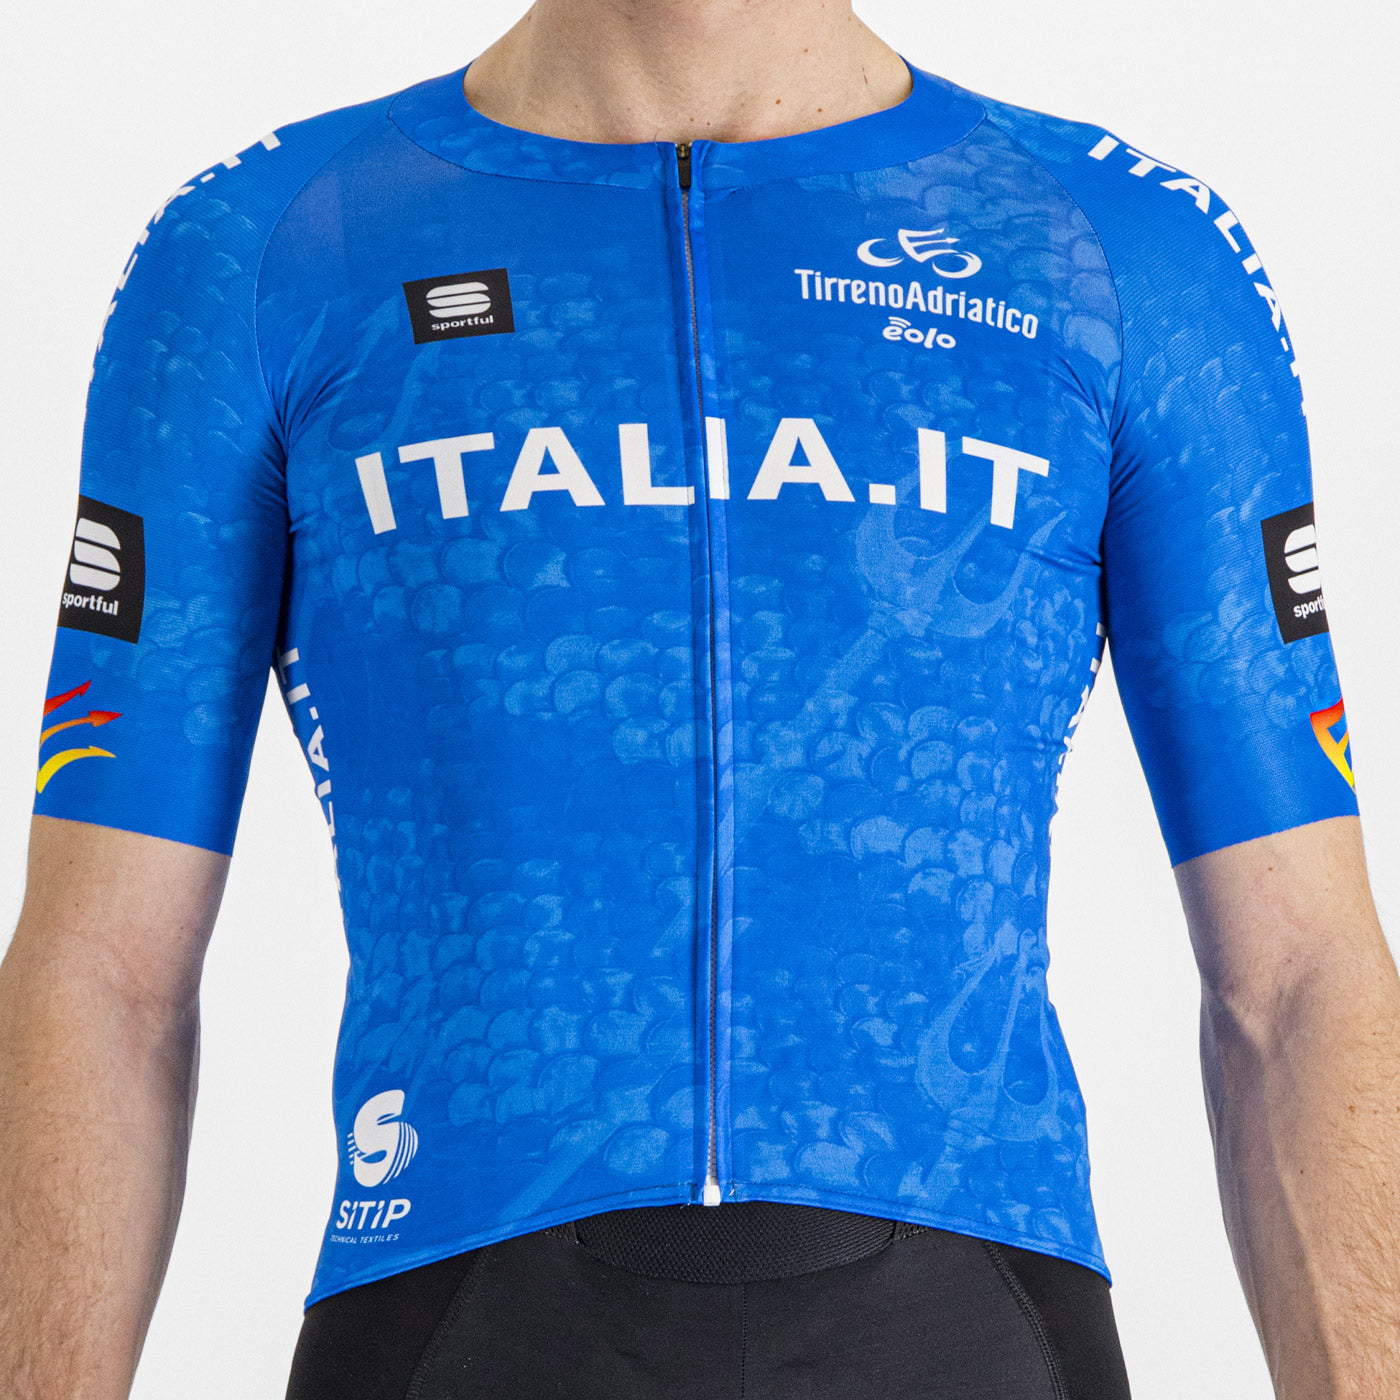 Tirreno Adriatico jersey - Light blue